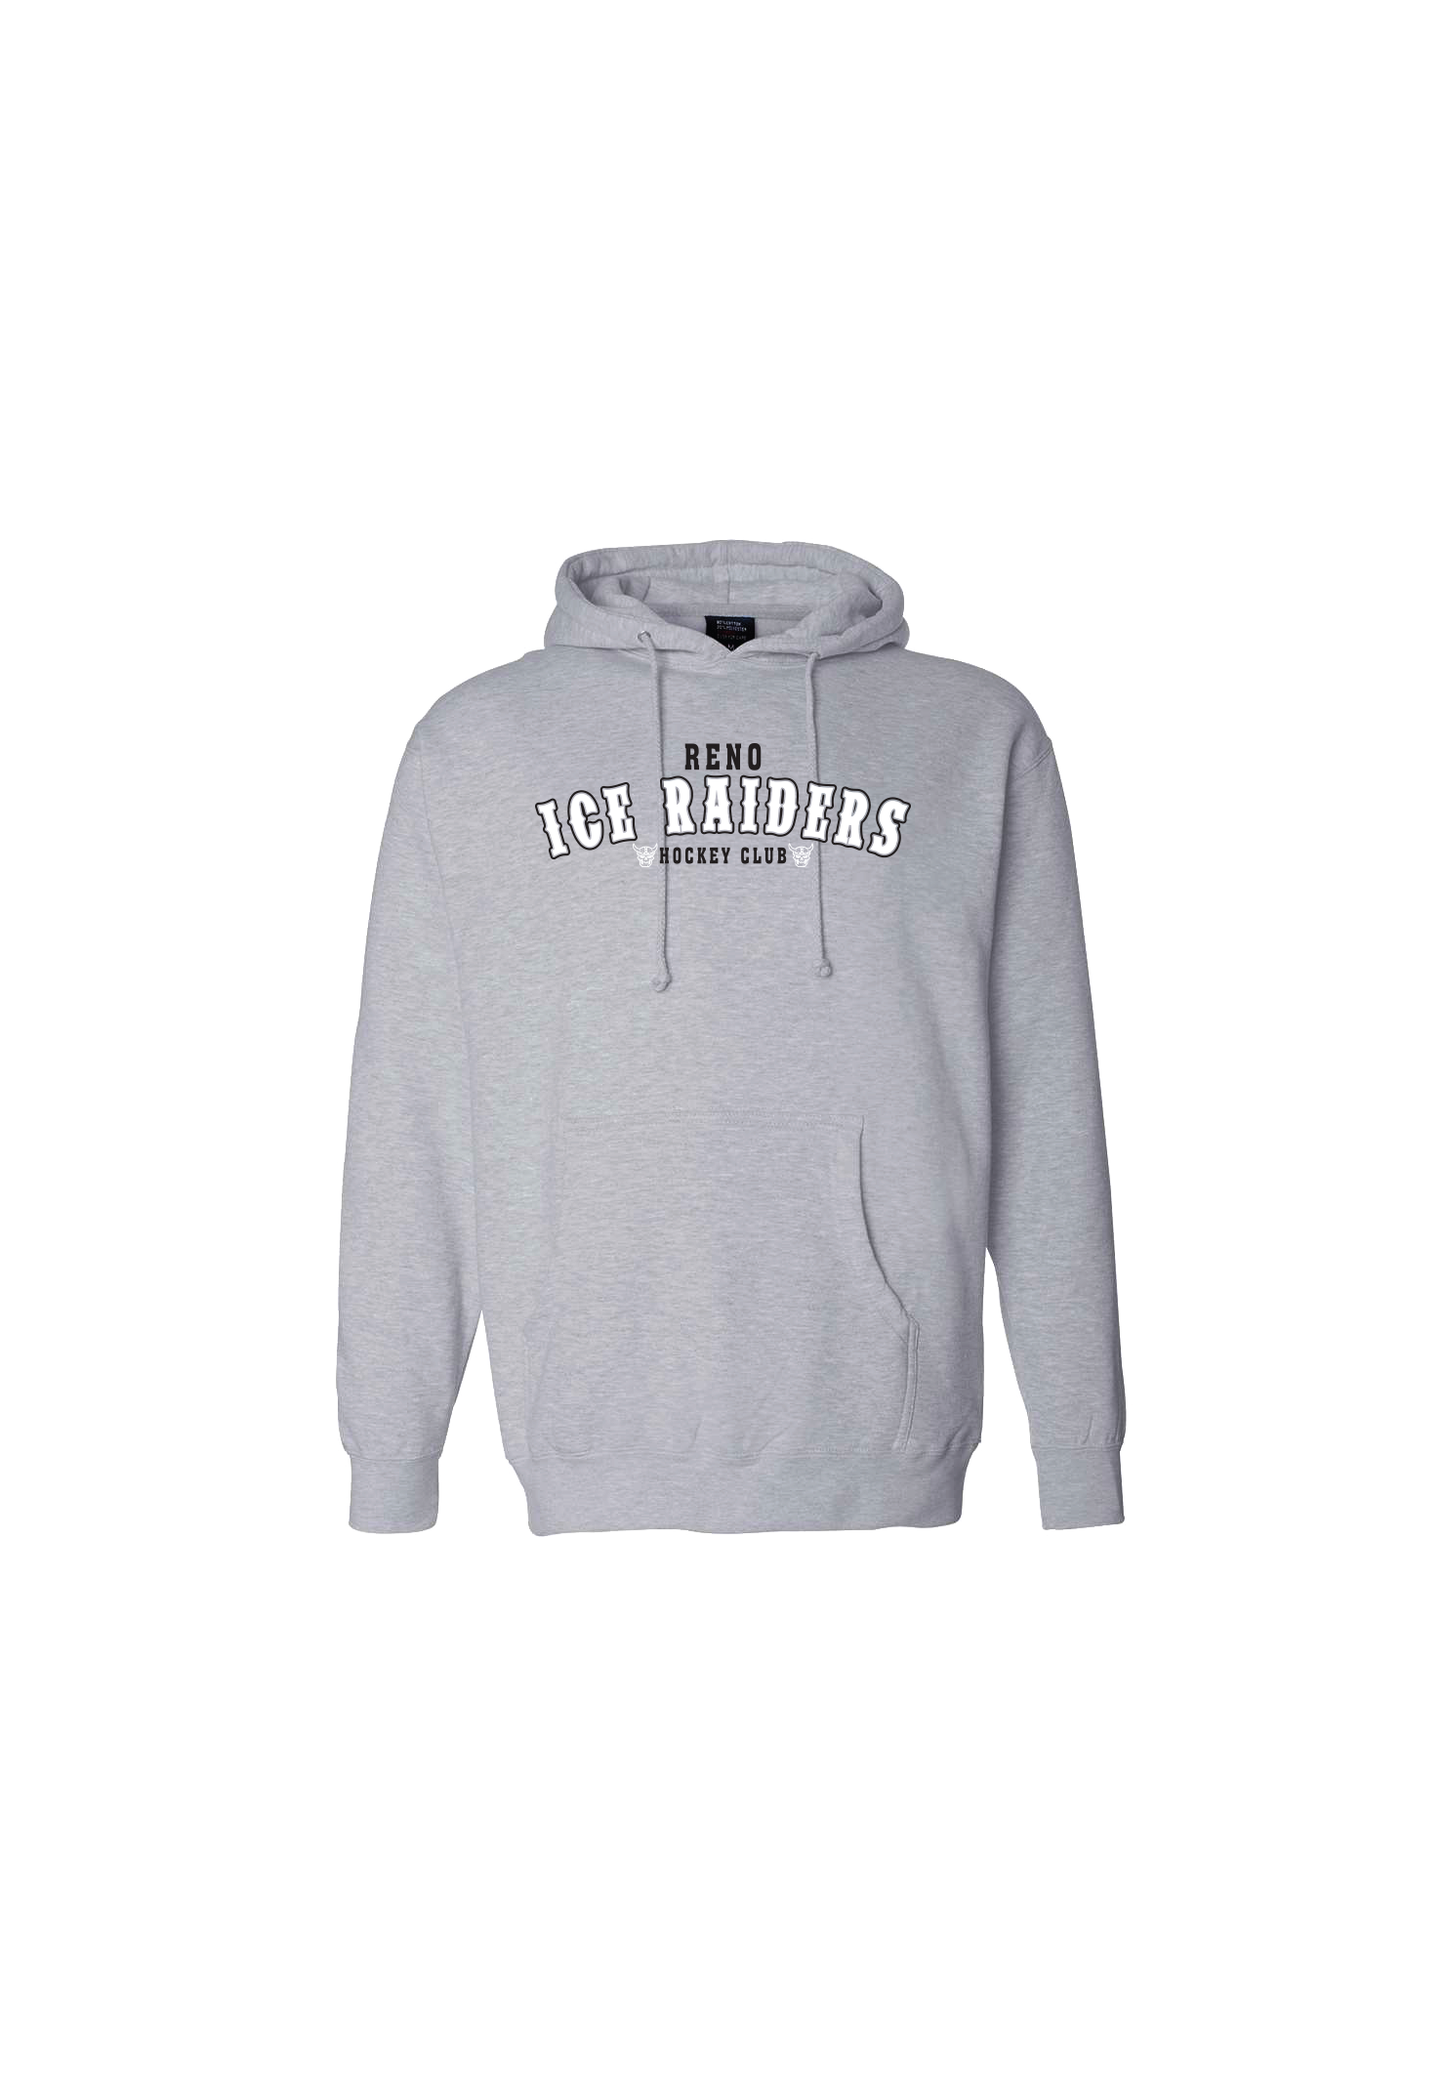 Ice Raiders Hockey Club Sweatshirt